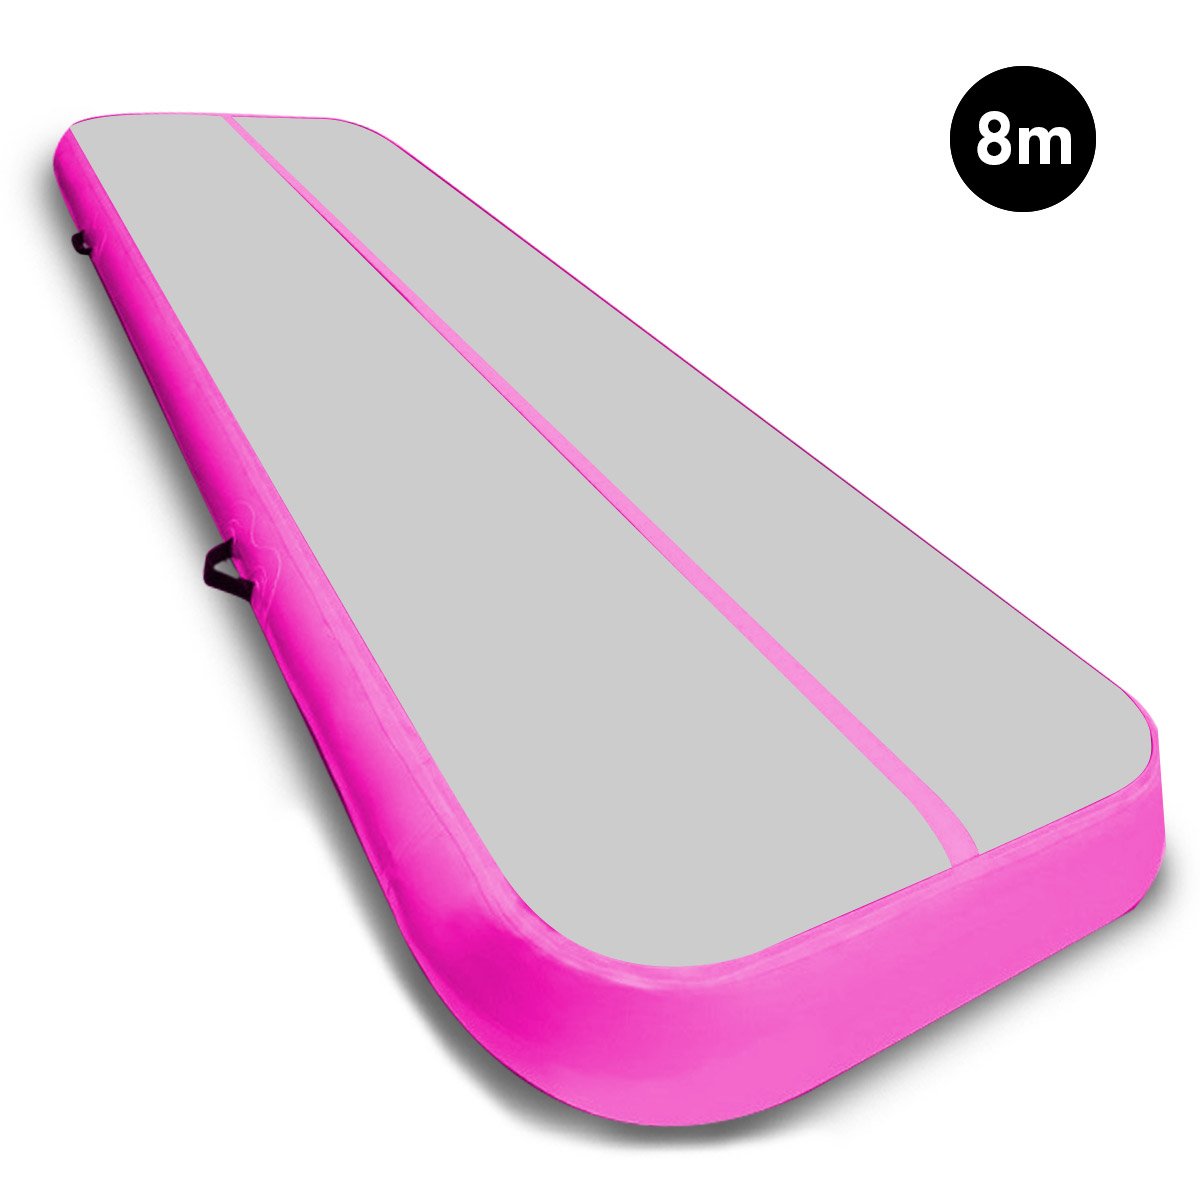 8m x 1m Air Track Inflatable Gymnastics Mat Tumbling - Grey Pink 2